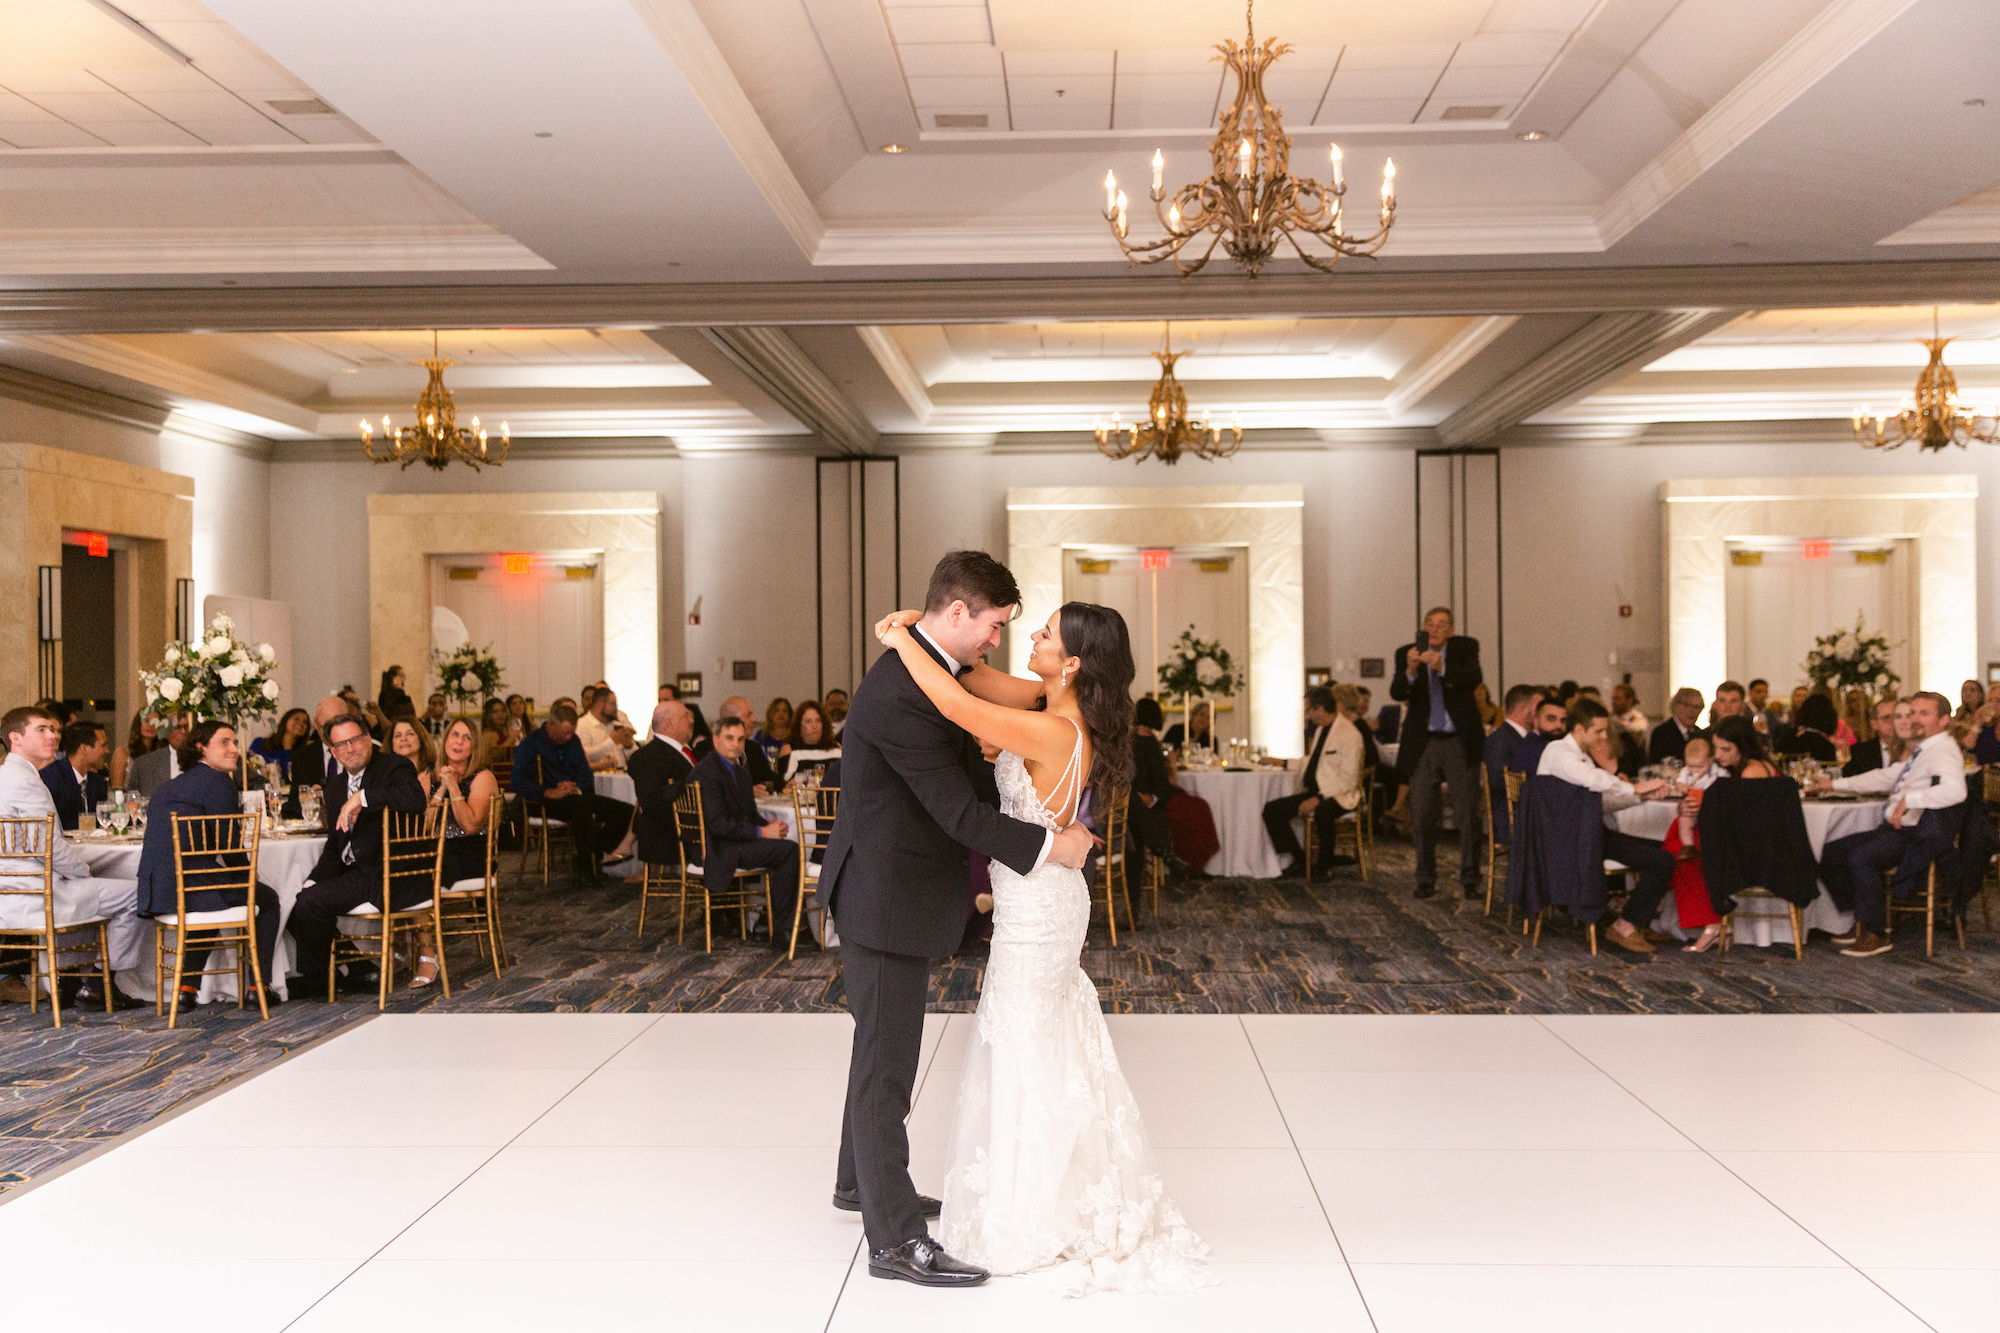 Classic Bride and Groom First Dance on White Dance Floor | Tampa Marriott Waterside Ballroom | Florida Wedding Planner EventFull Weddings